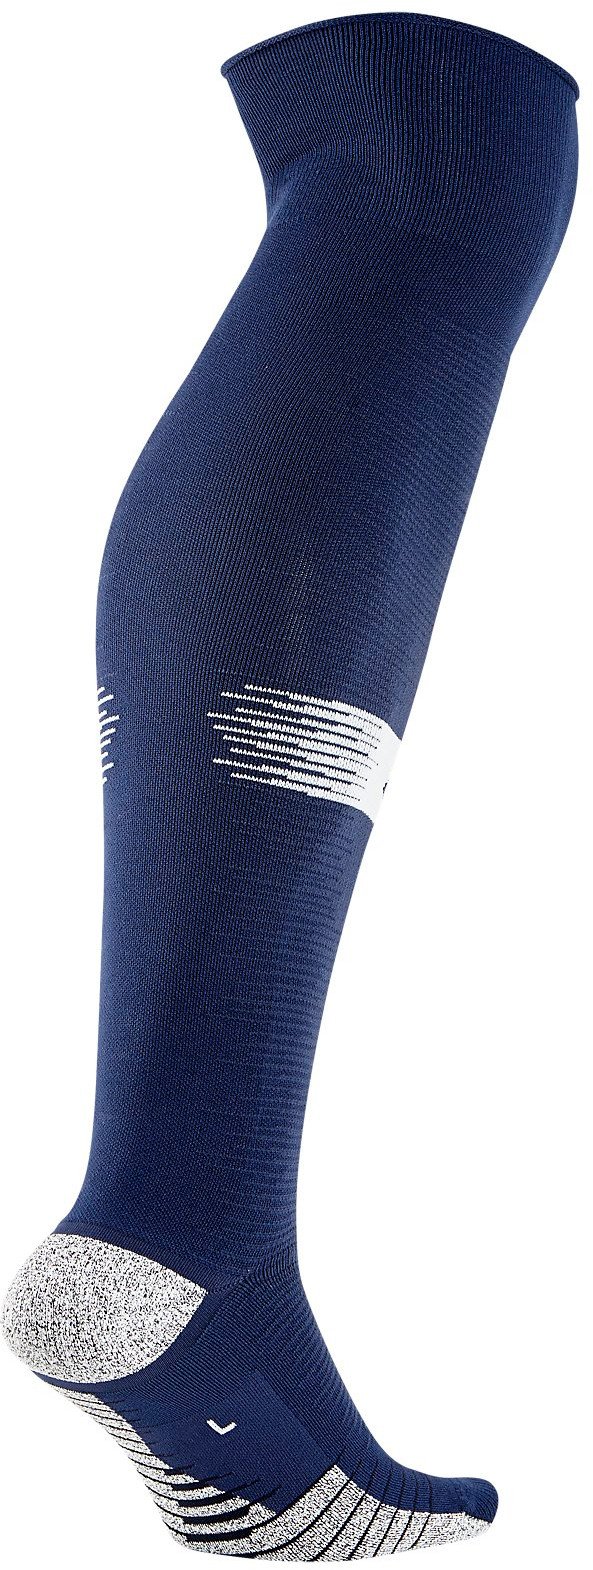 light blue nike football socks